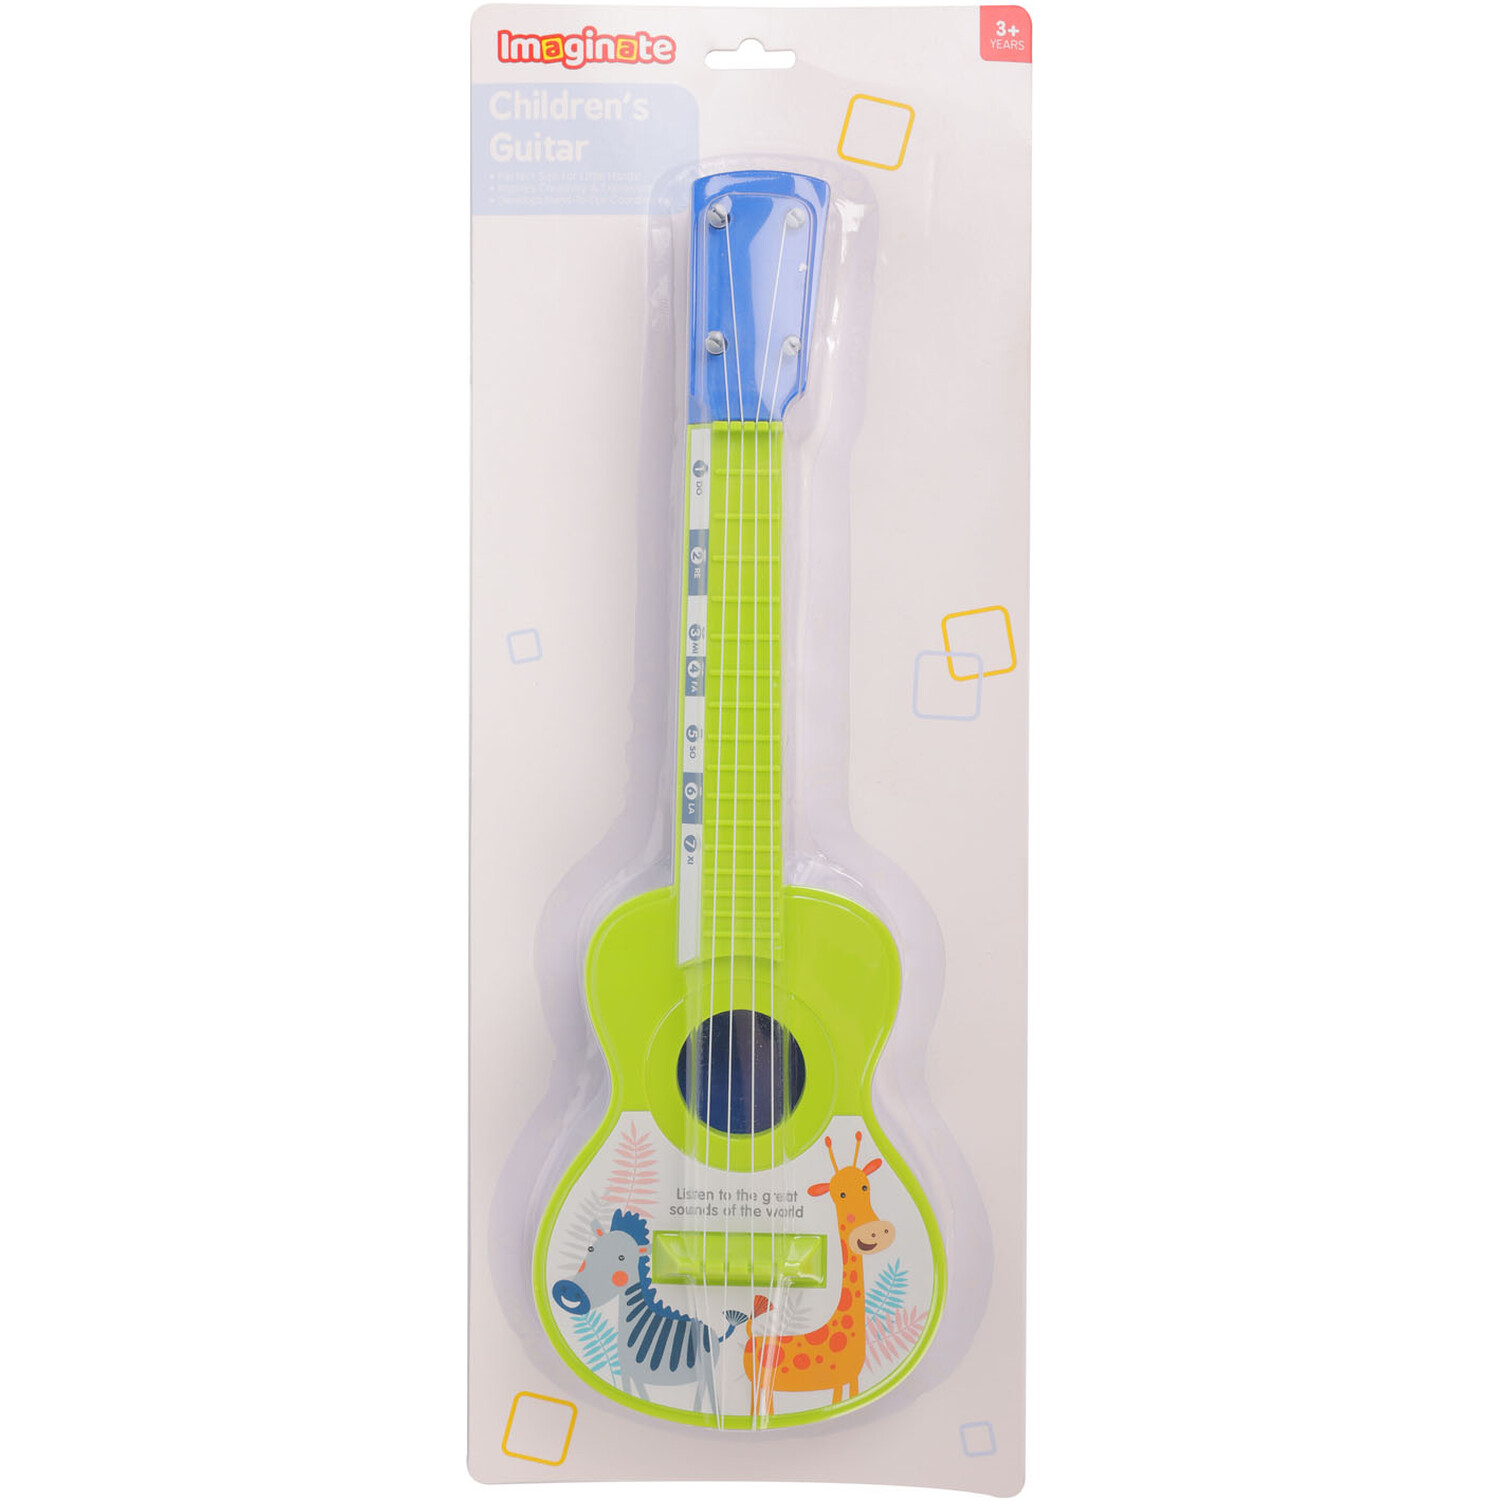 Children's Acoustic Guitar Image 2